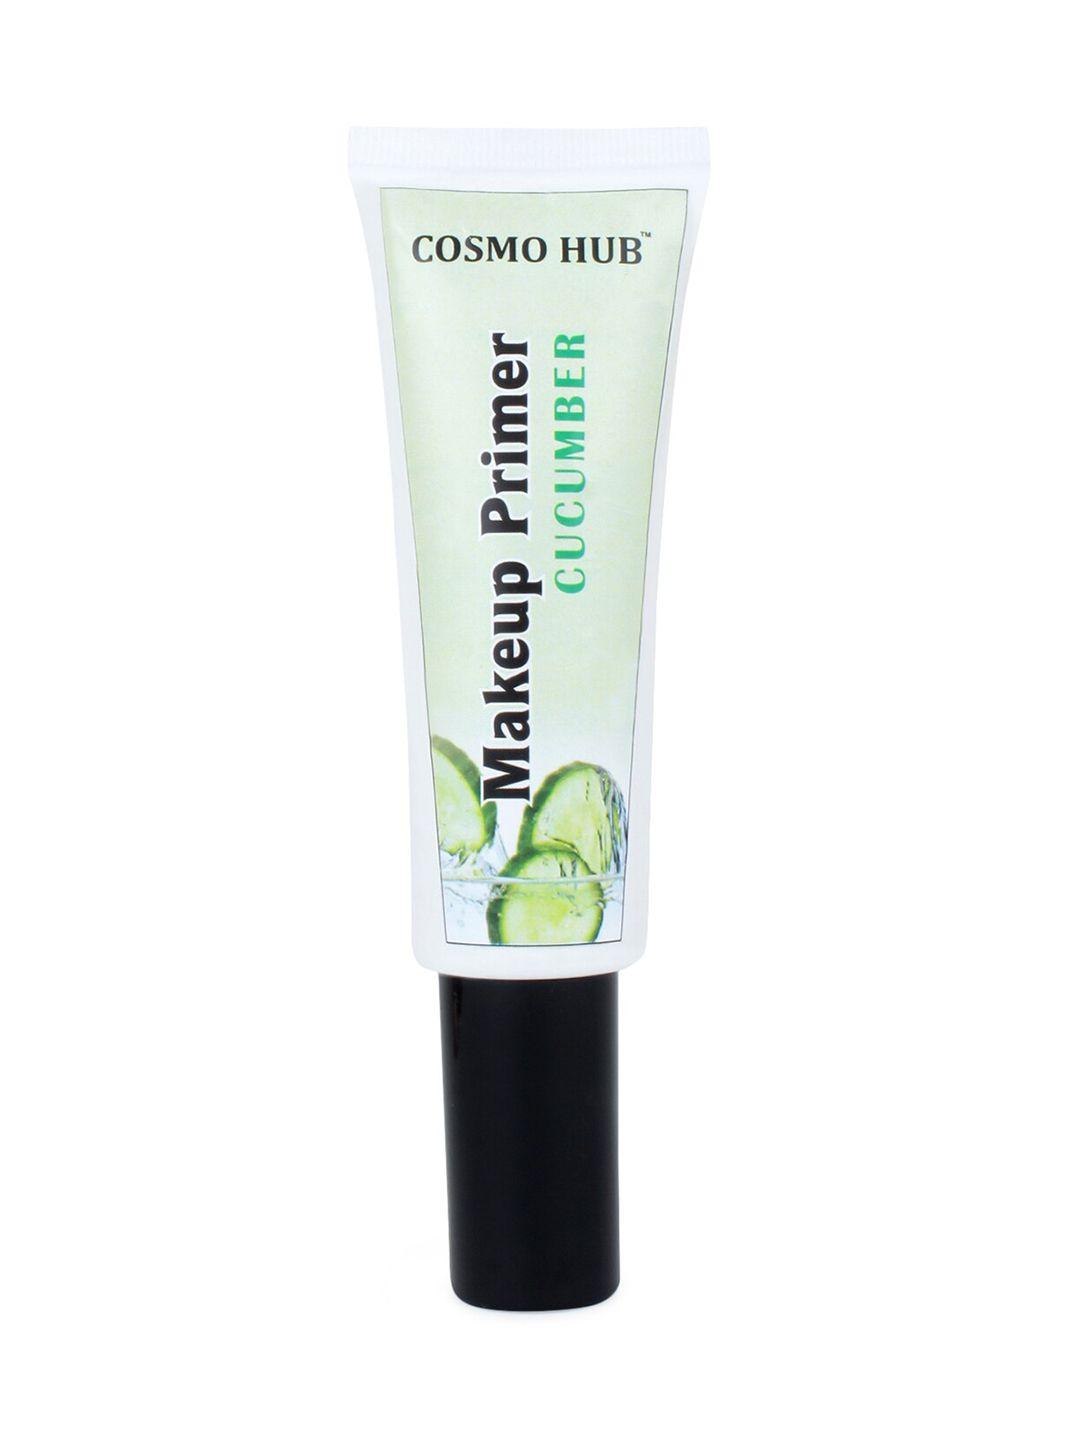 cosmo hub cucumber make up primer tube - 70 g